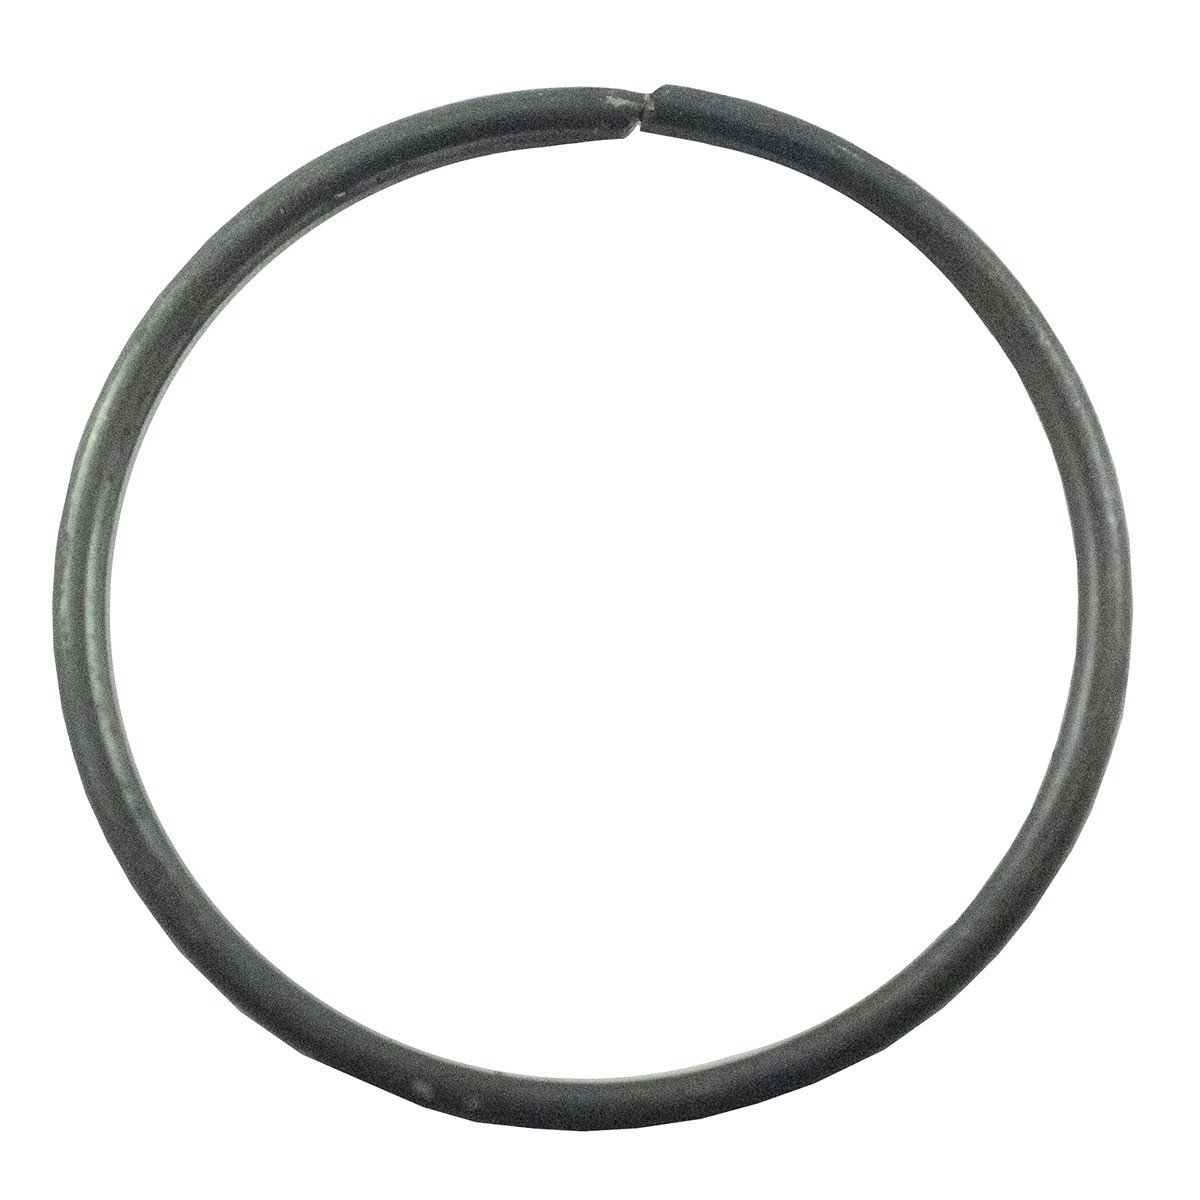 Snap ring Ø 31 mm, drive system VST MT180 / MT224 / MT270, 10070553001